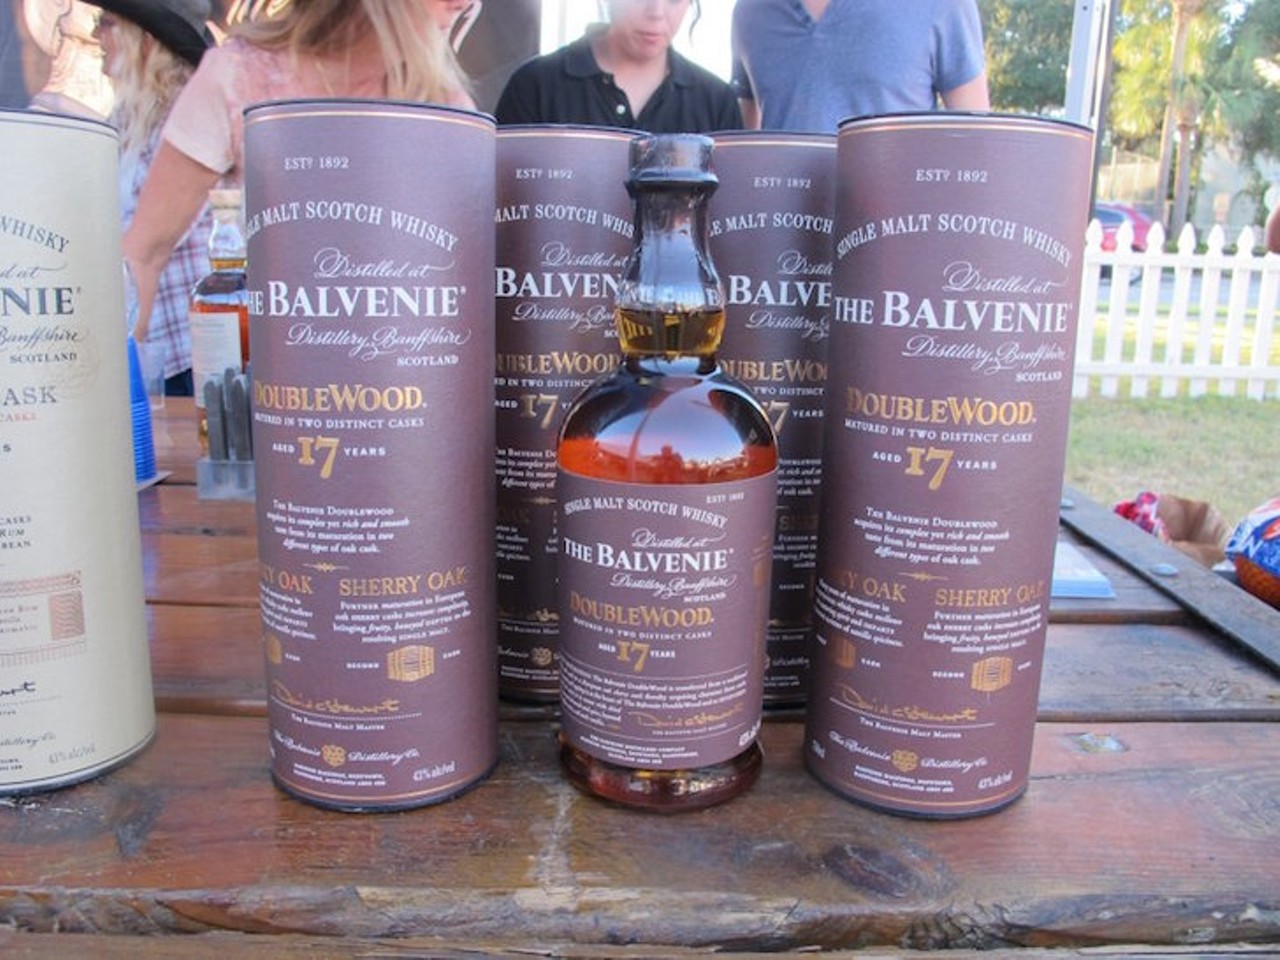 17-year-old scotch from the Balvenie Distillery